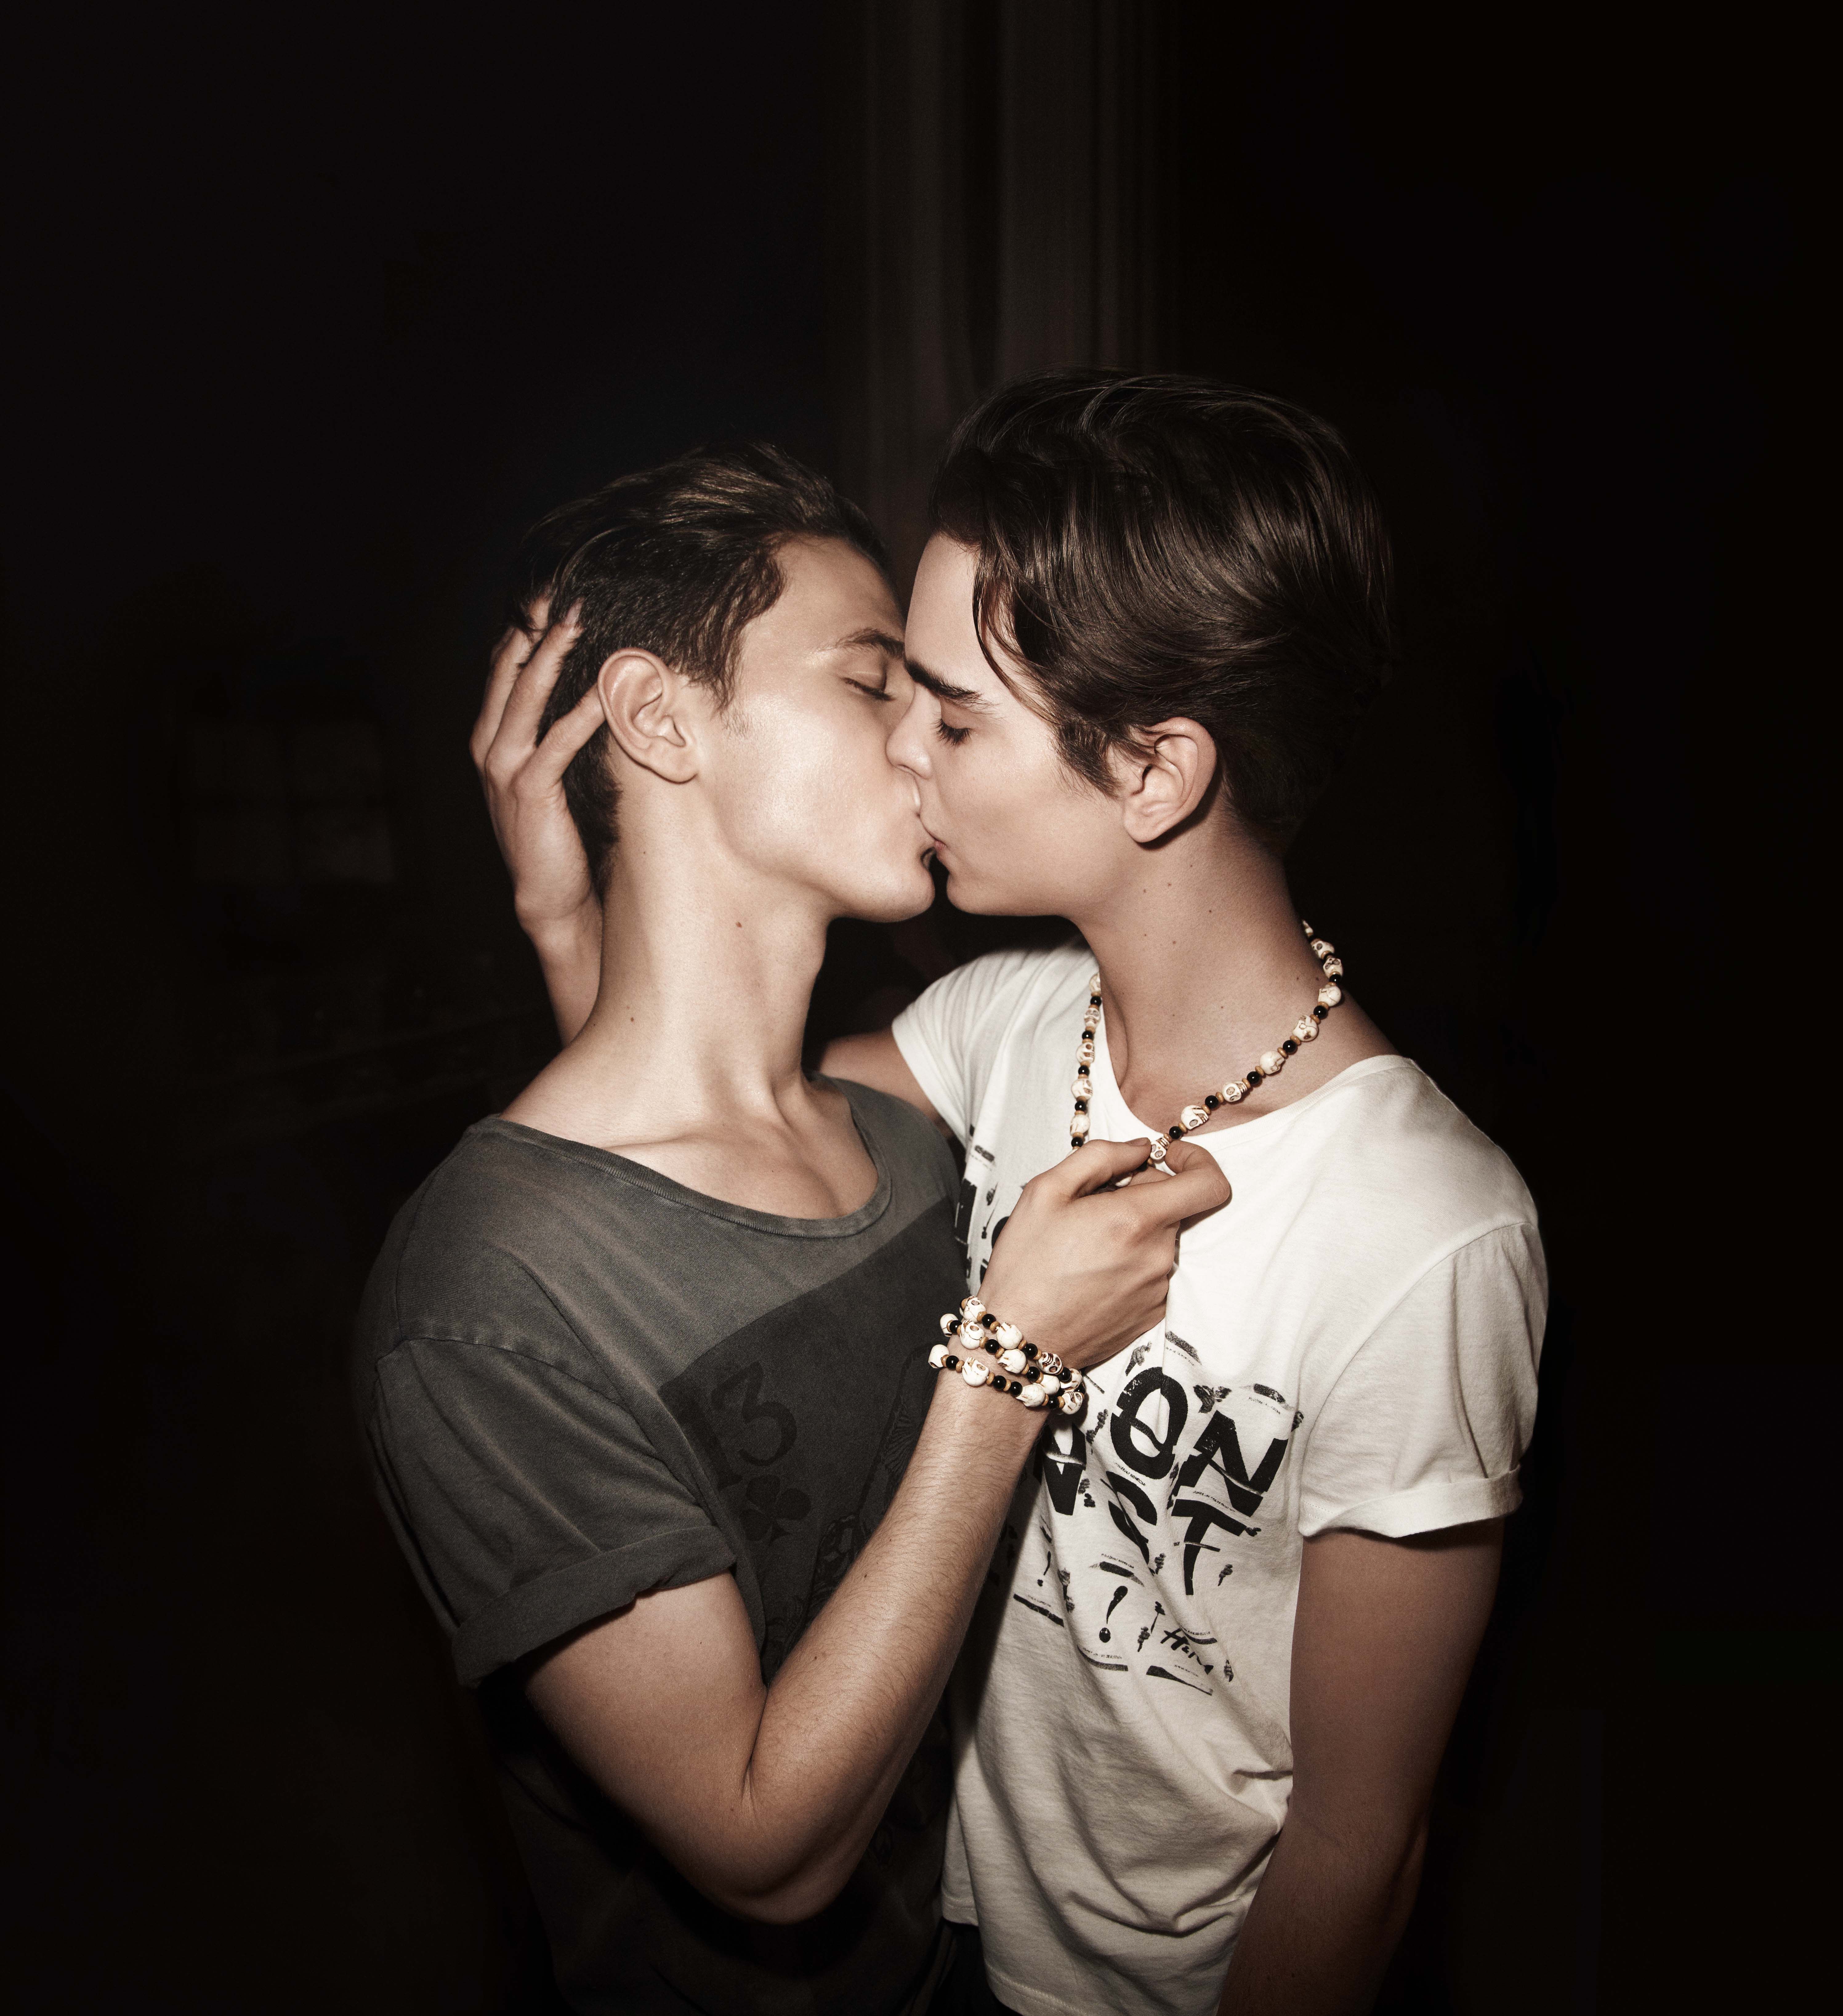 геи мальчики целуются фото фото 18